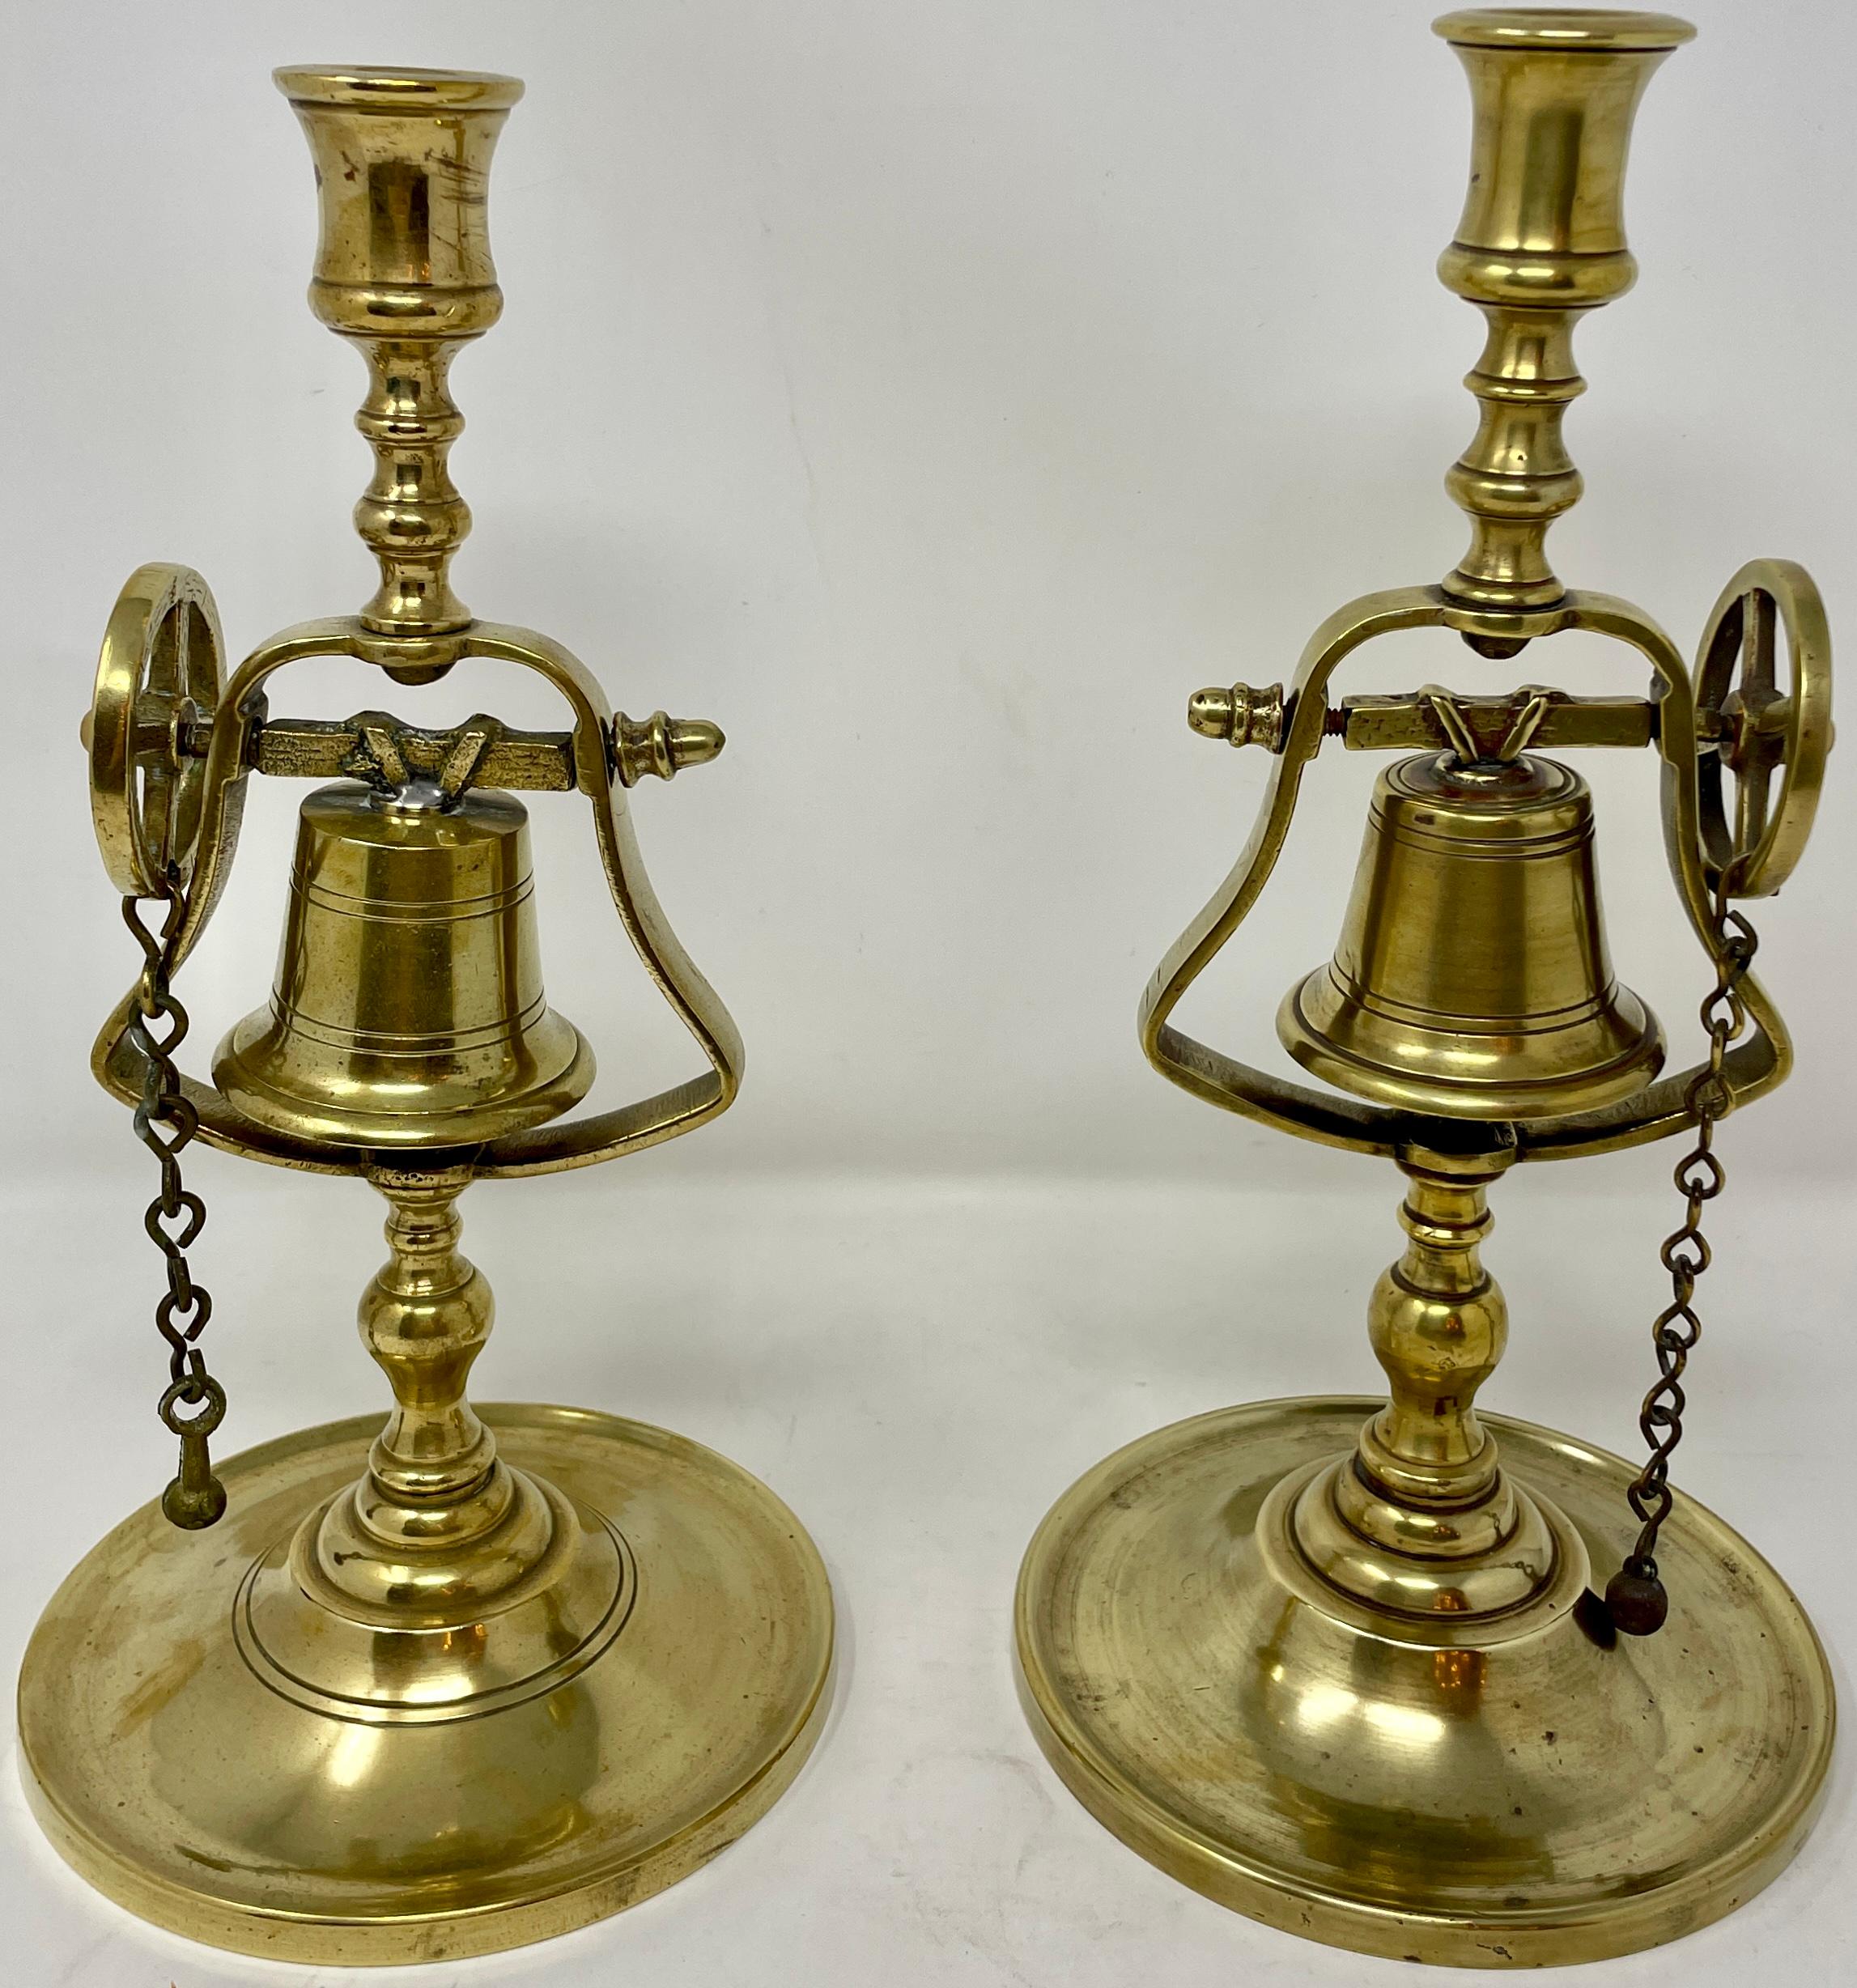 Pair Antique English Victorian Brass Pub or Tavern Candlesticks with Service Bells, Circa 1890.